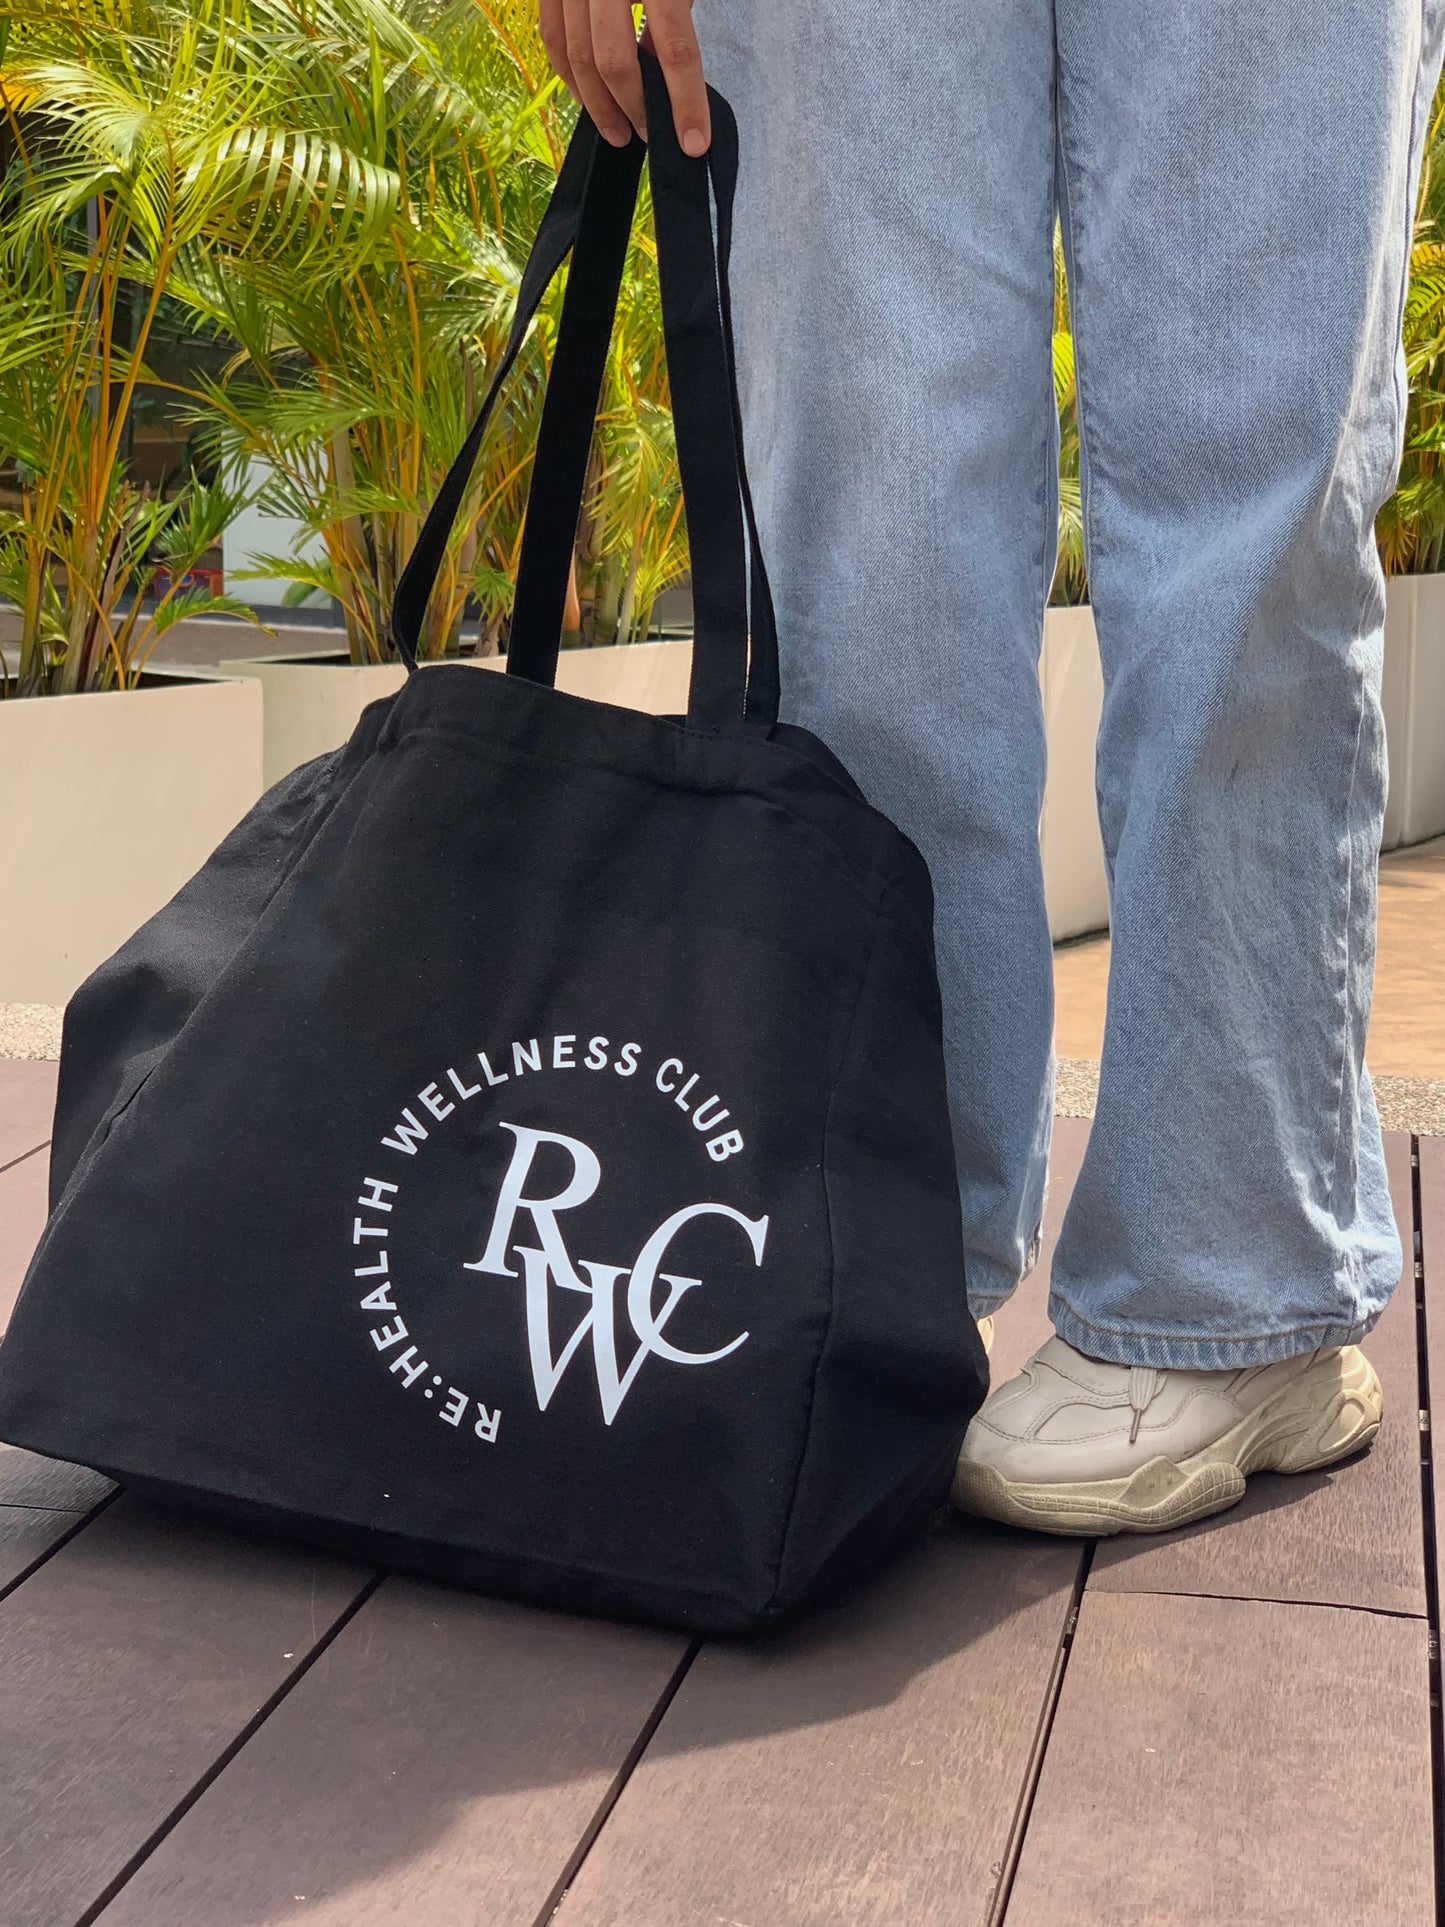 RE:HEALTH wellness club tote bag